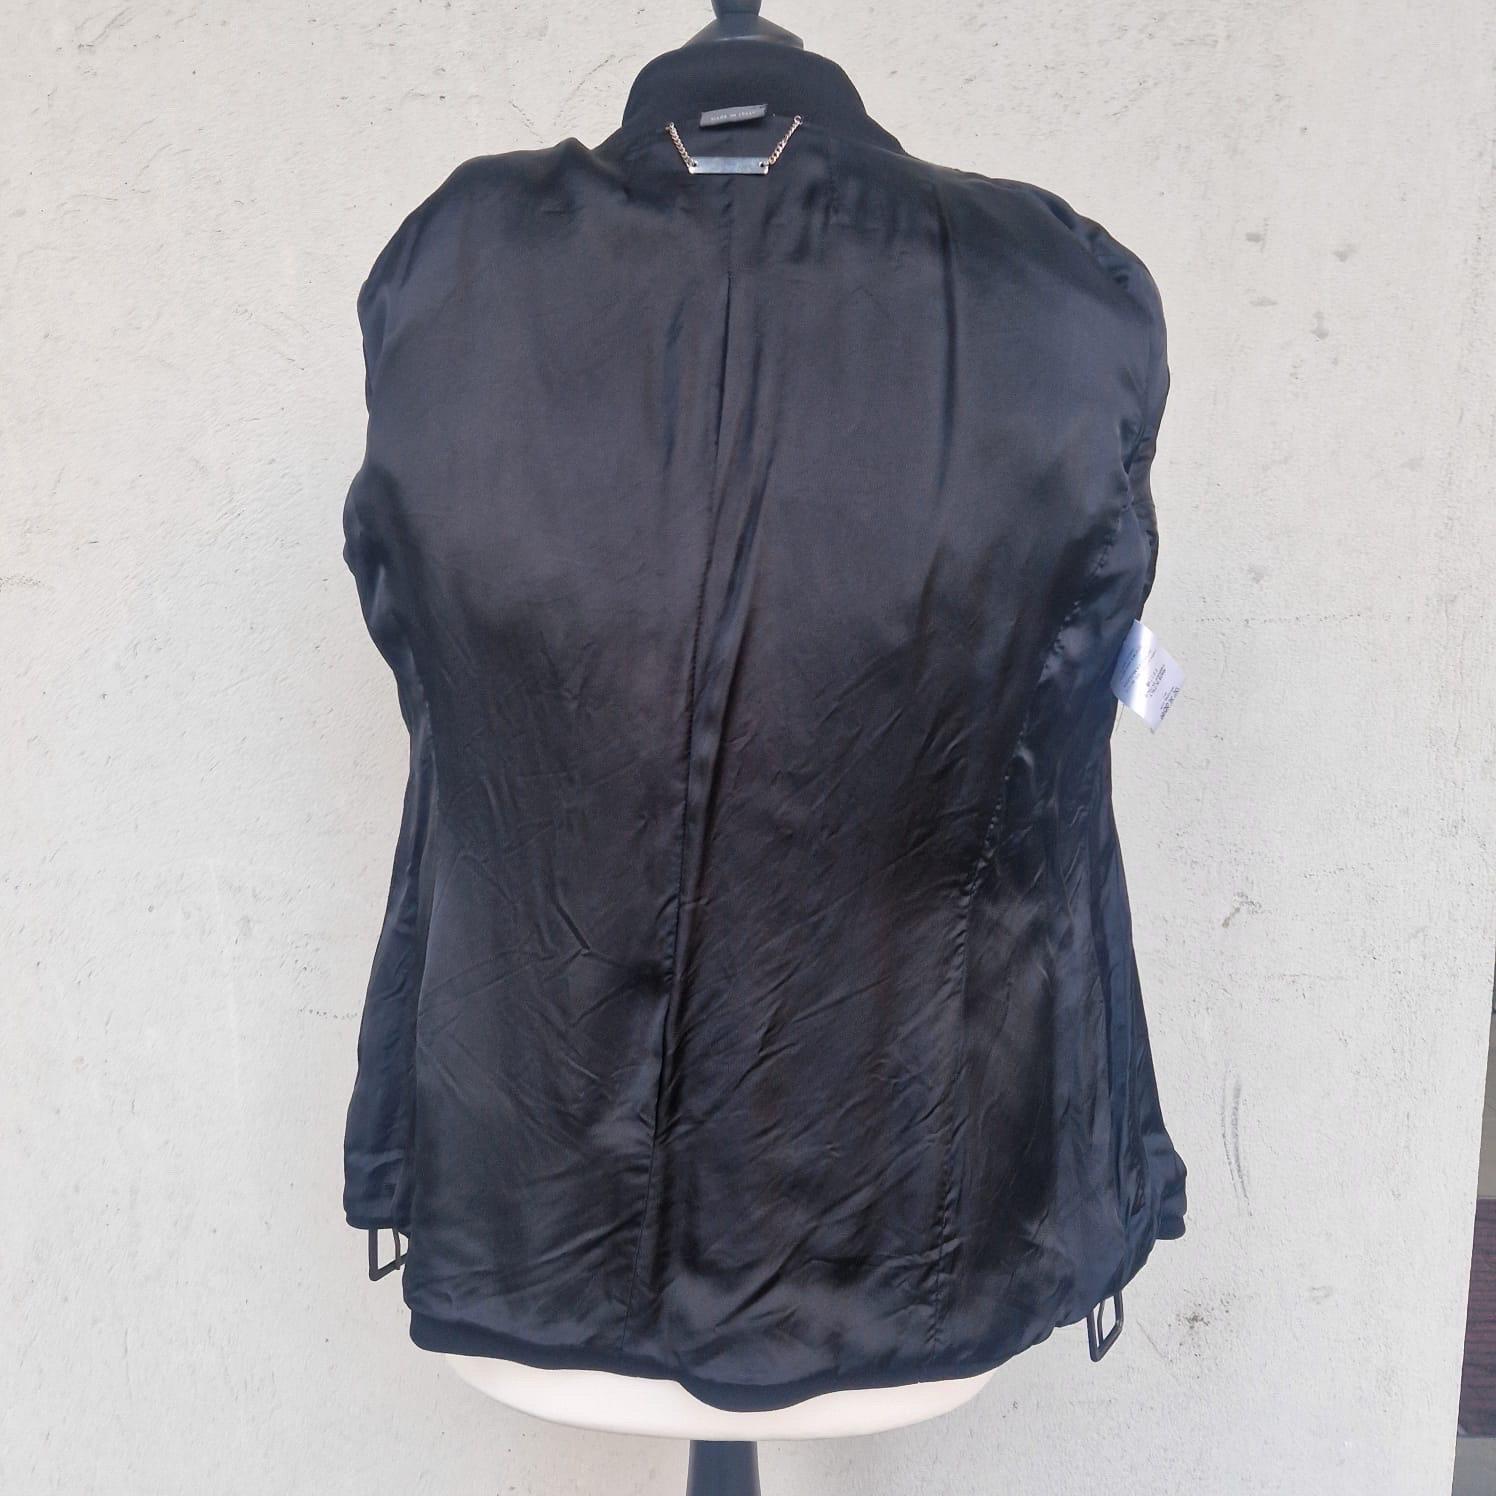 Alexander McQueen 2002 Supercalifragilistic Wool Black Leather Harness Jacket. 5